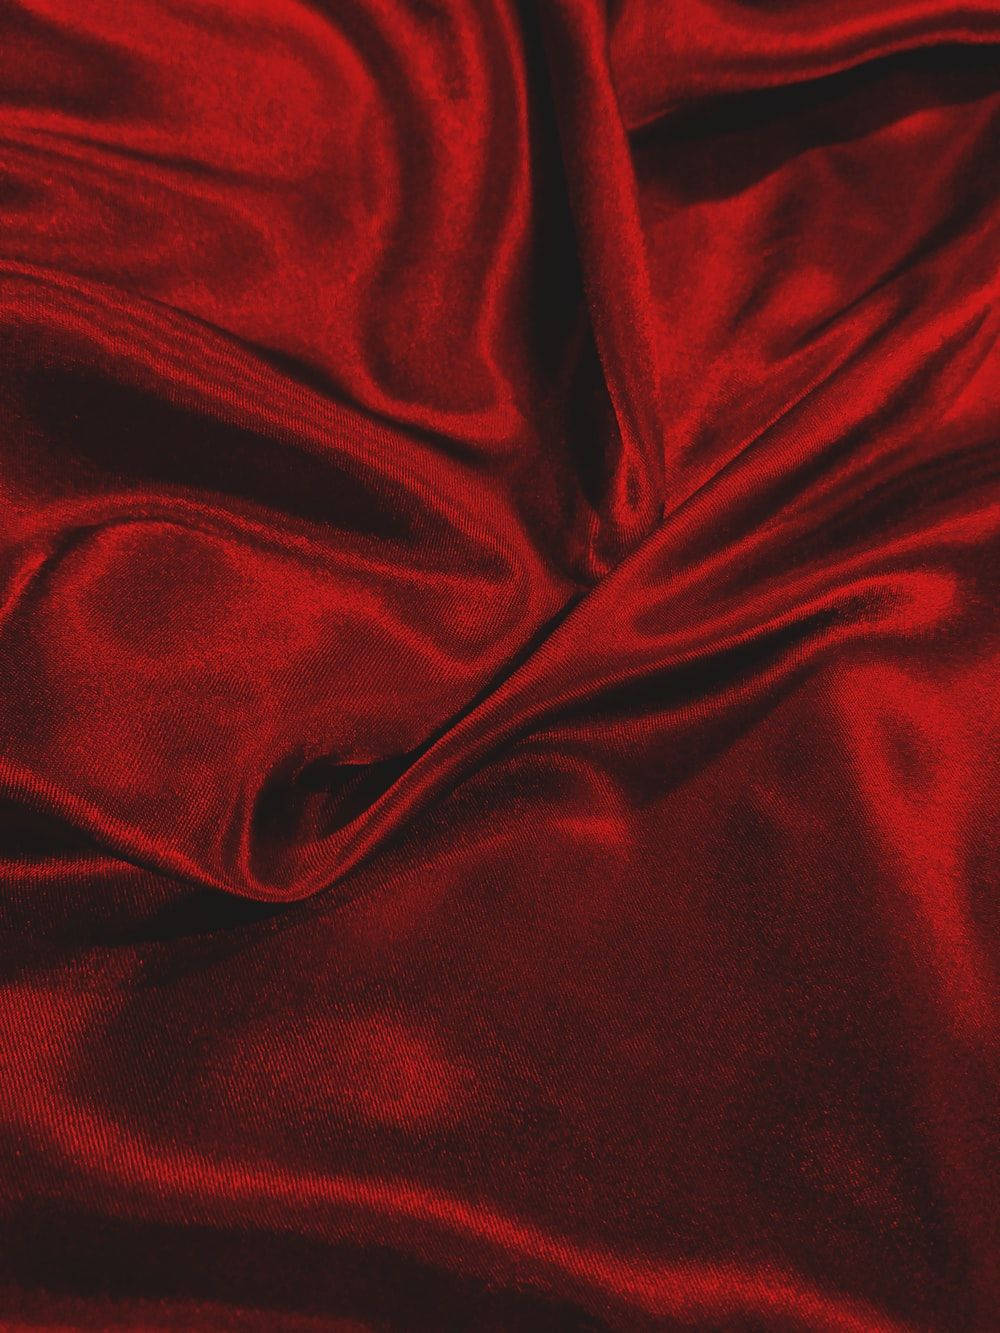 Pure Red Creased Silk Wallpaper